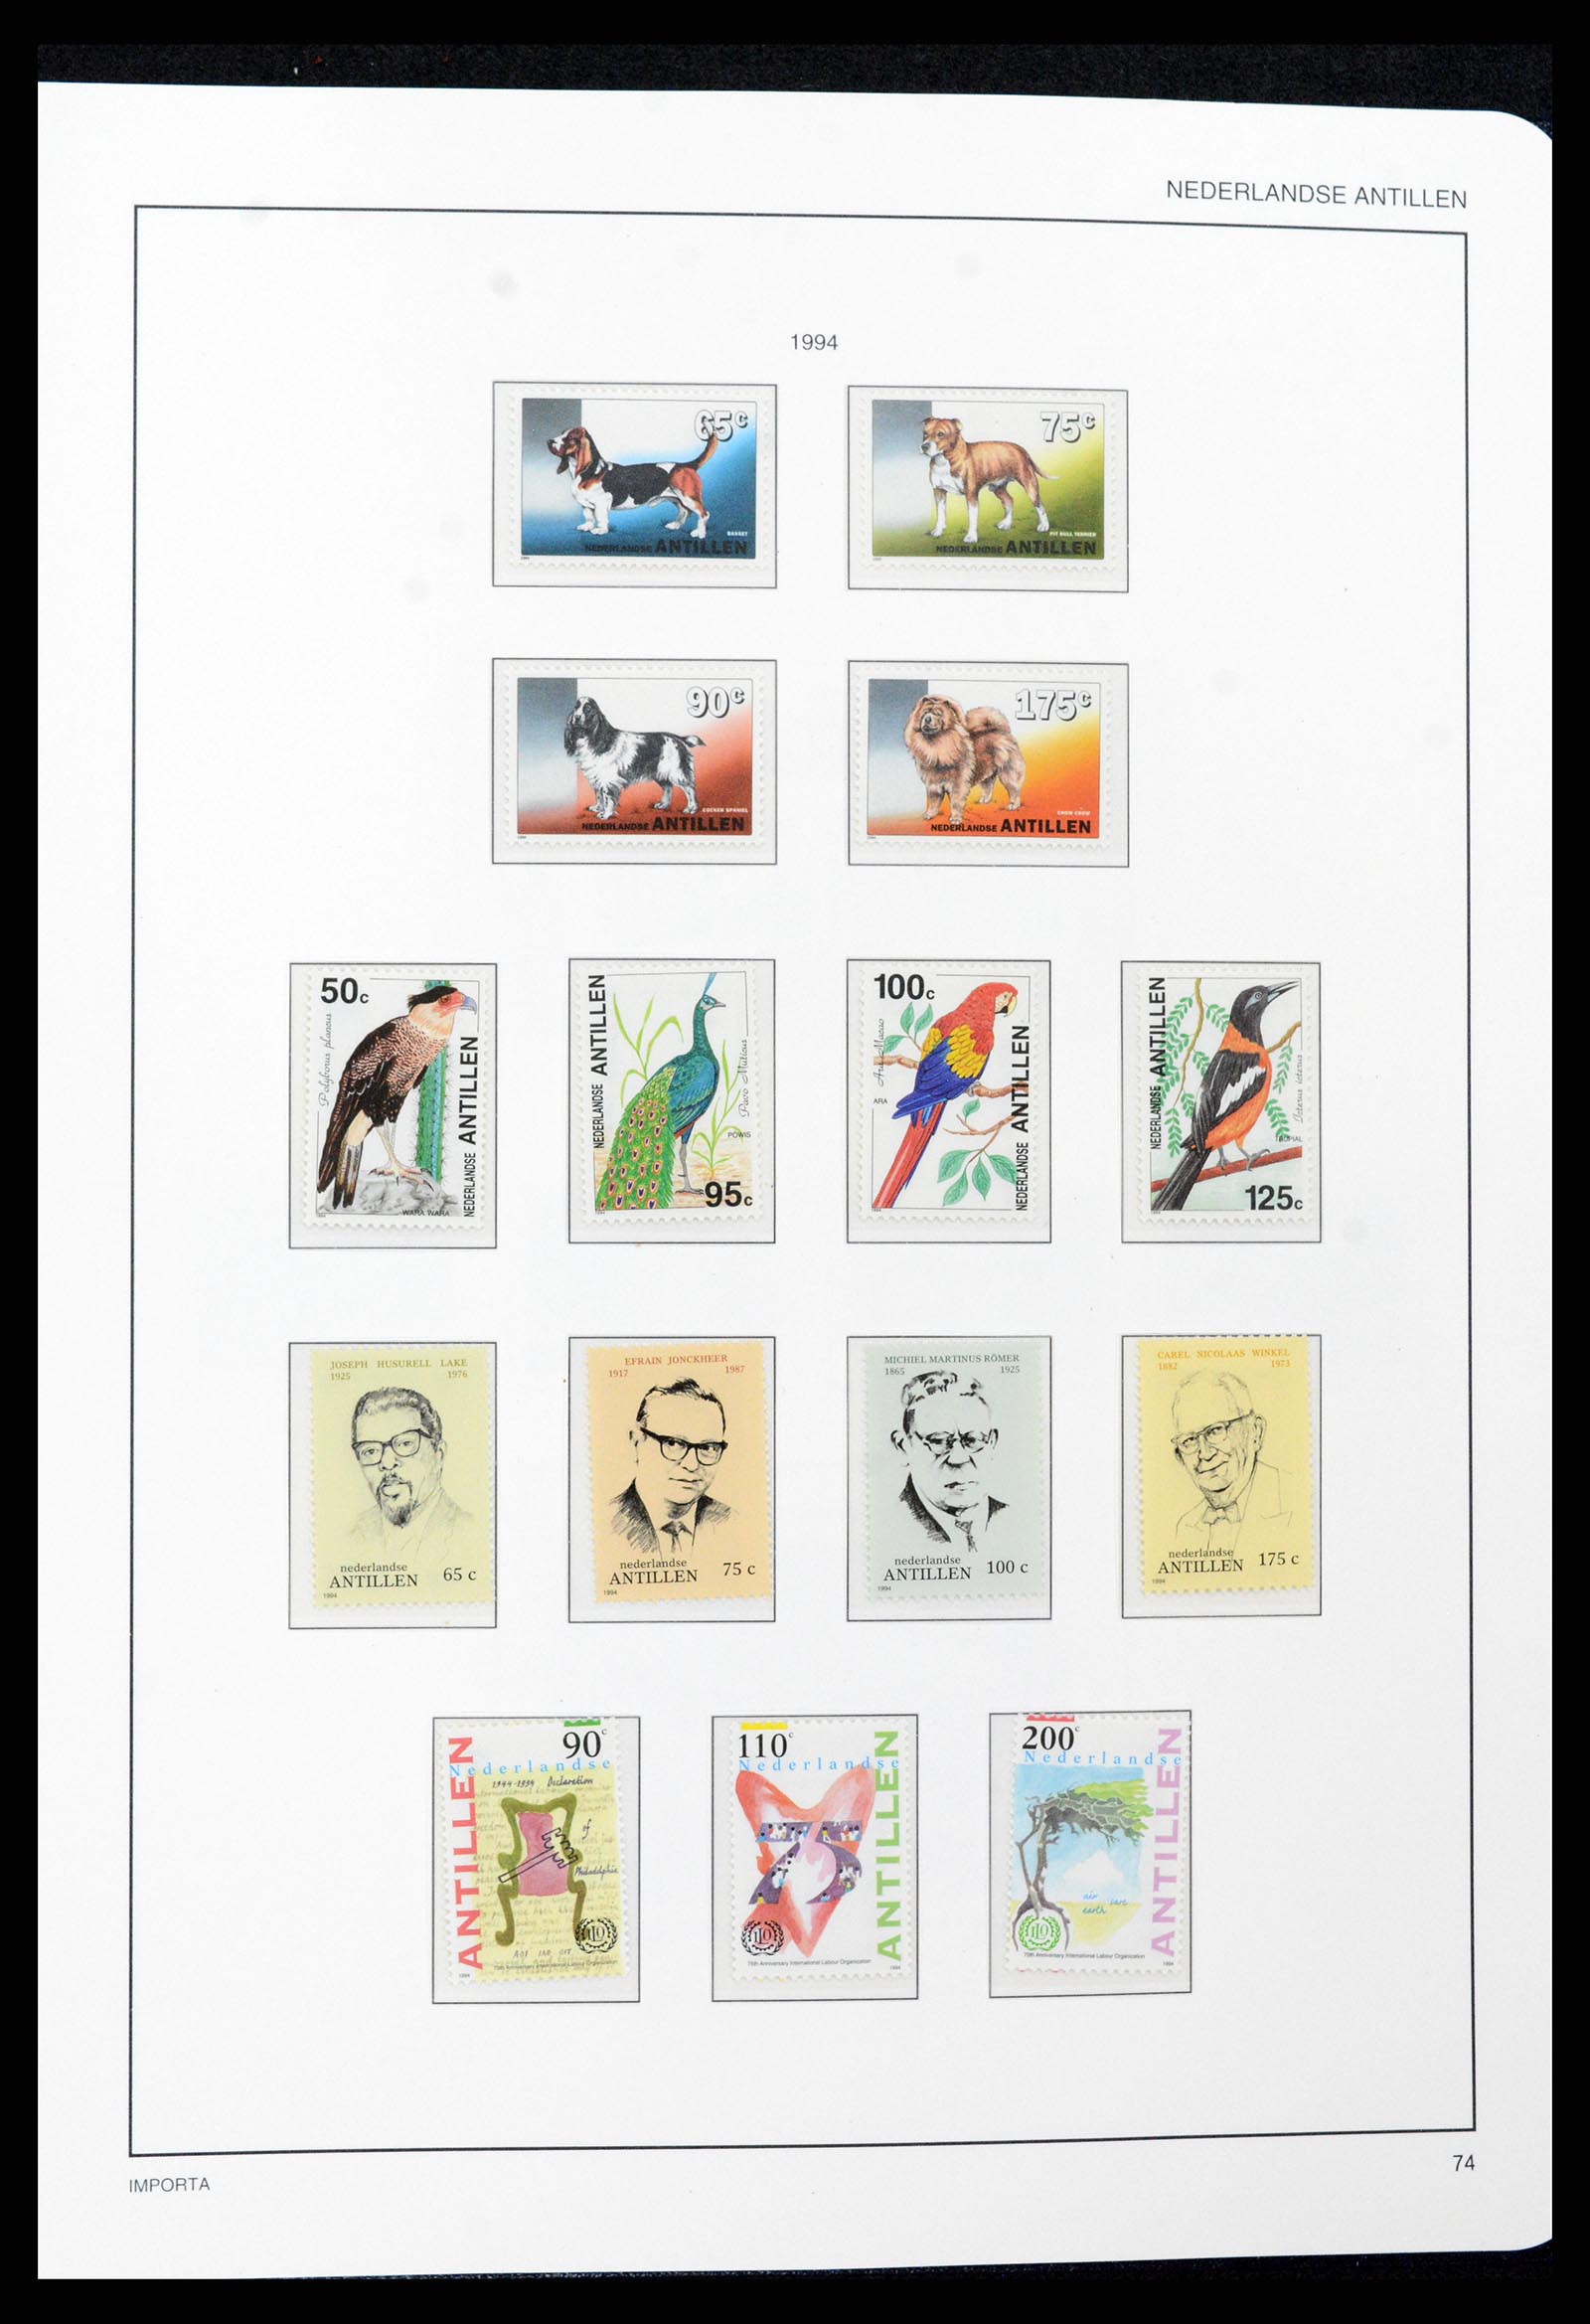 37693 075 - Stamp collection 37693 Netherlands Antilles 1949-2001.